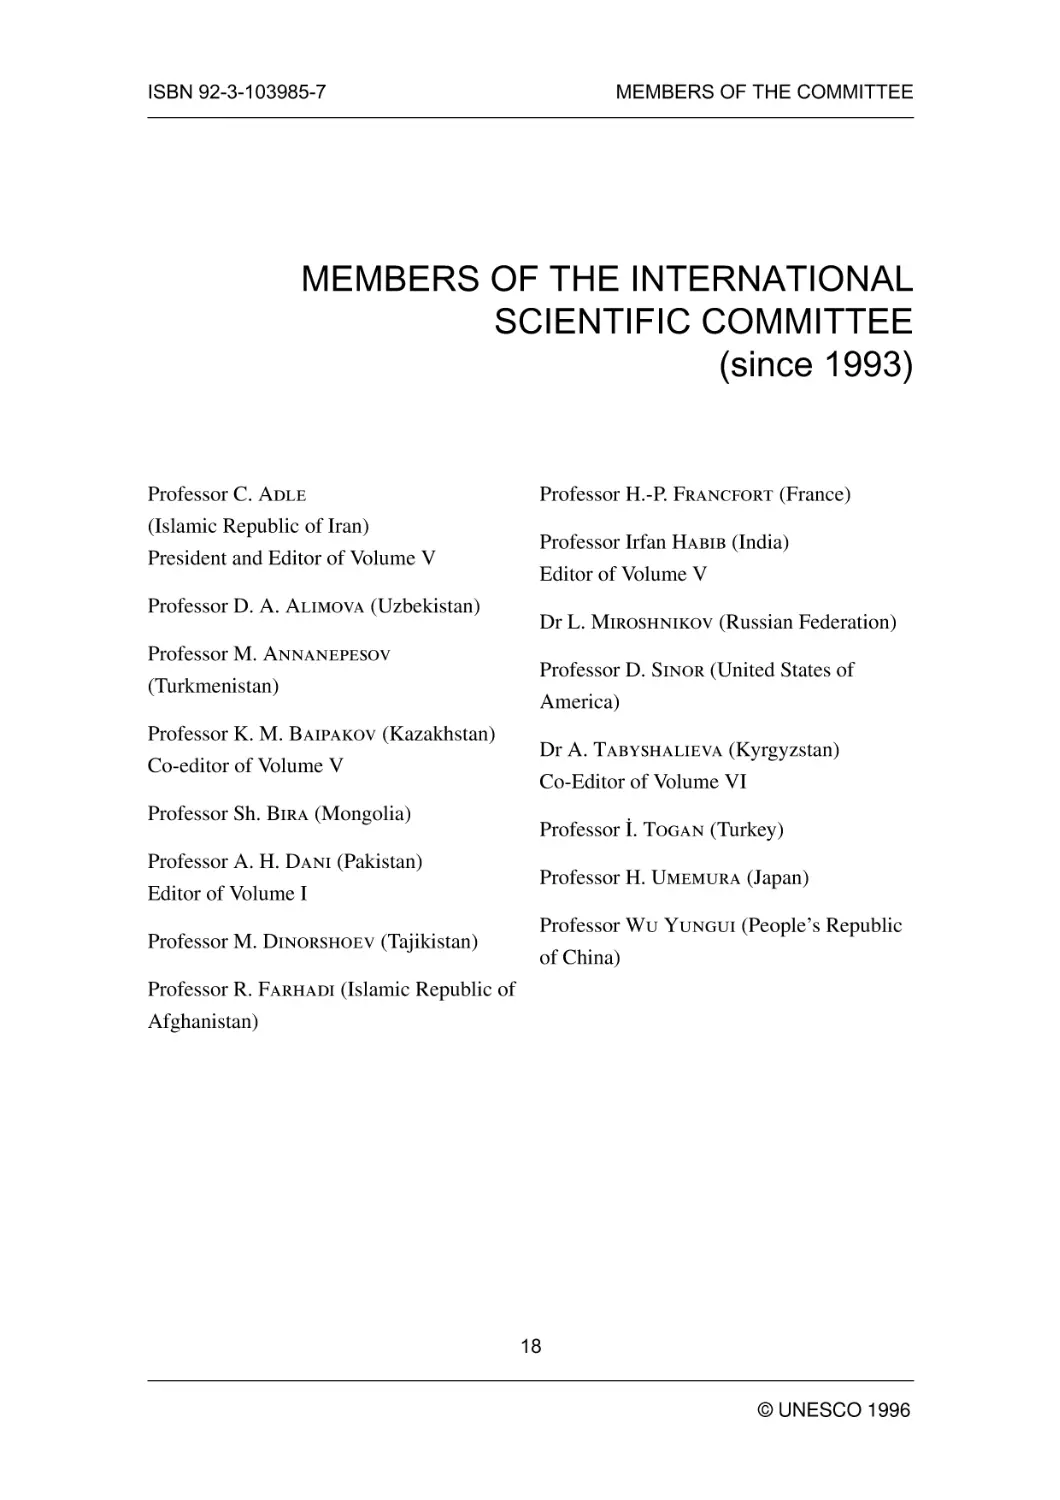 MEMBERS OF THE INTERNATIONAL SCIENTIFIC COMMITTEE (since 1993)